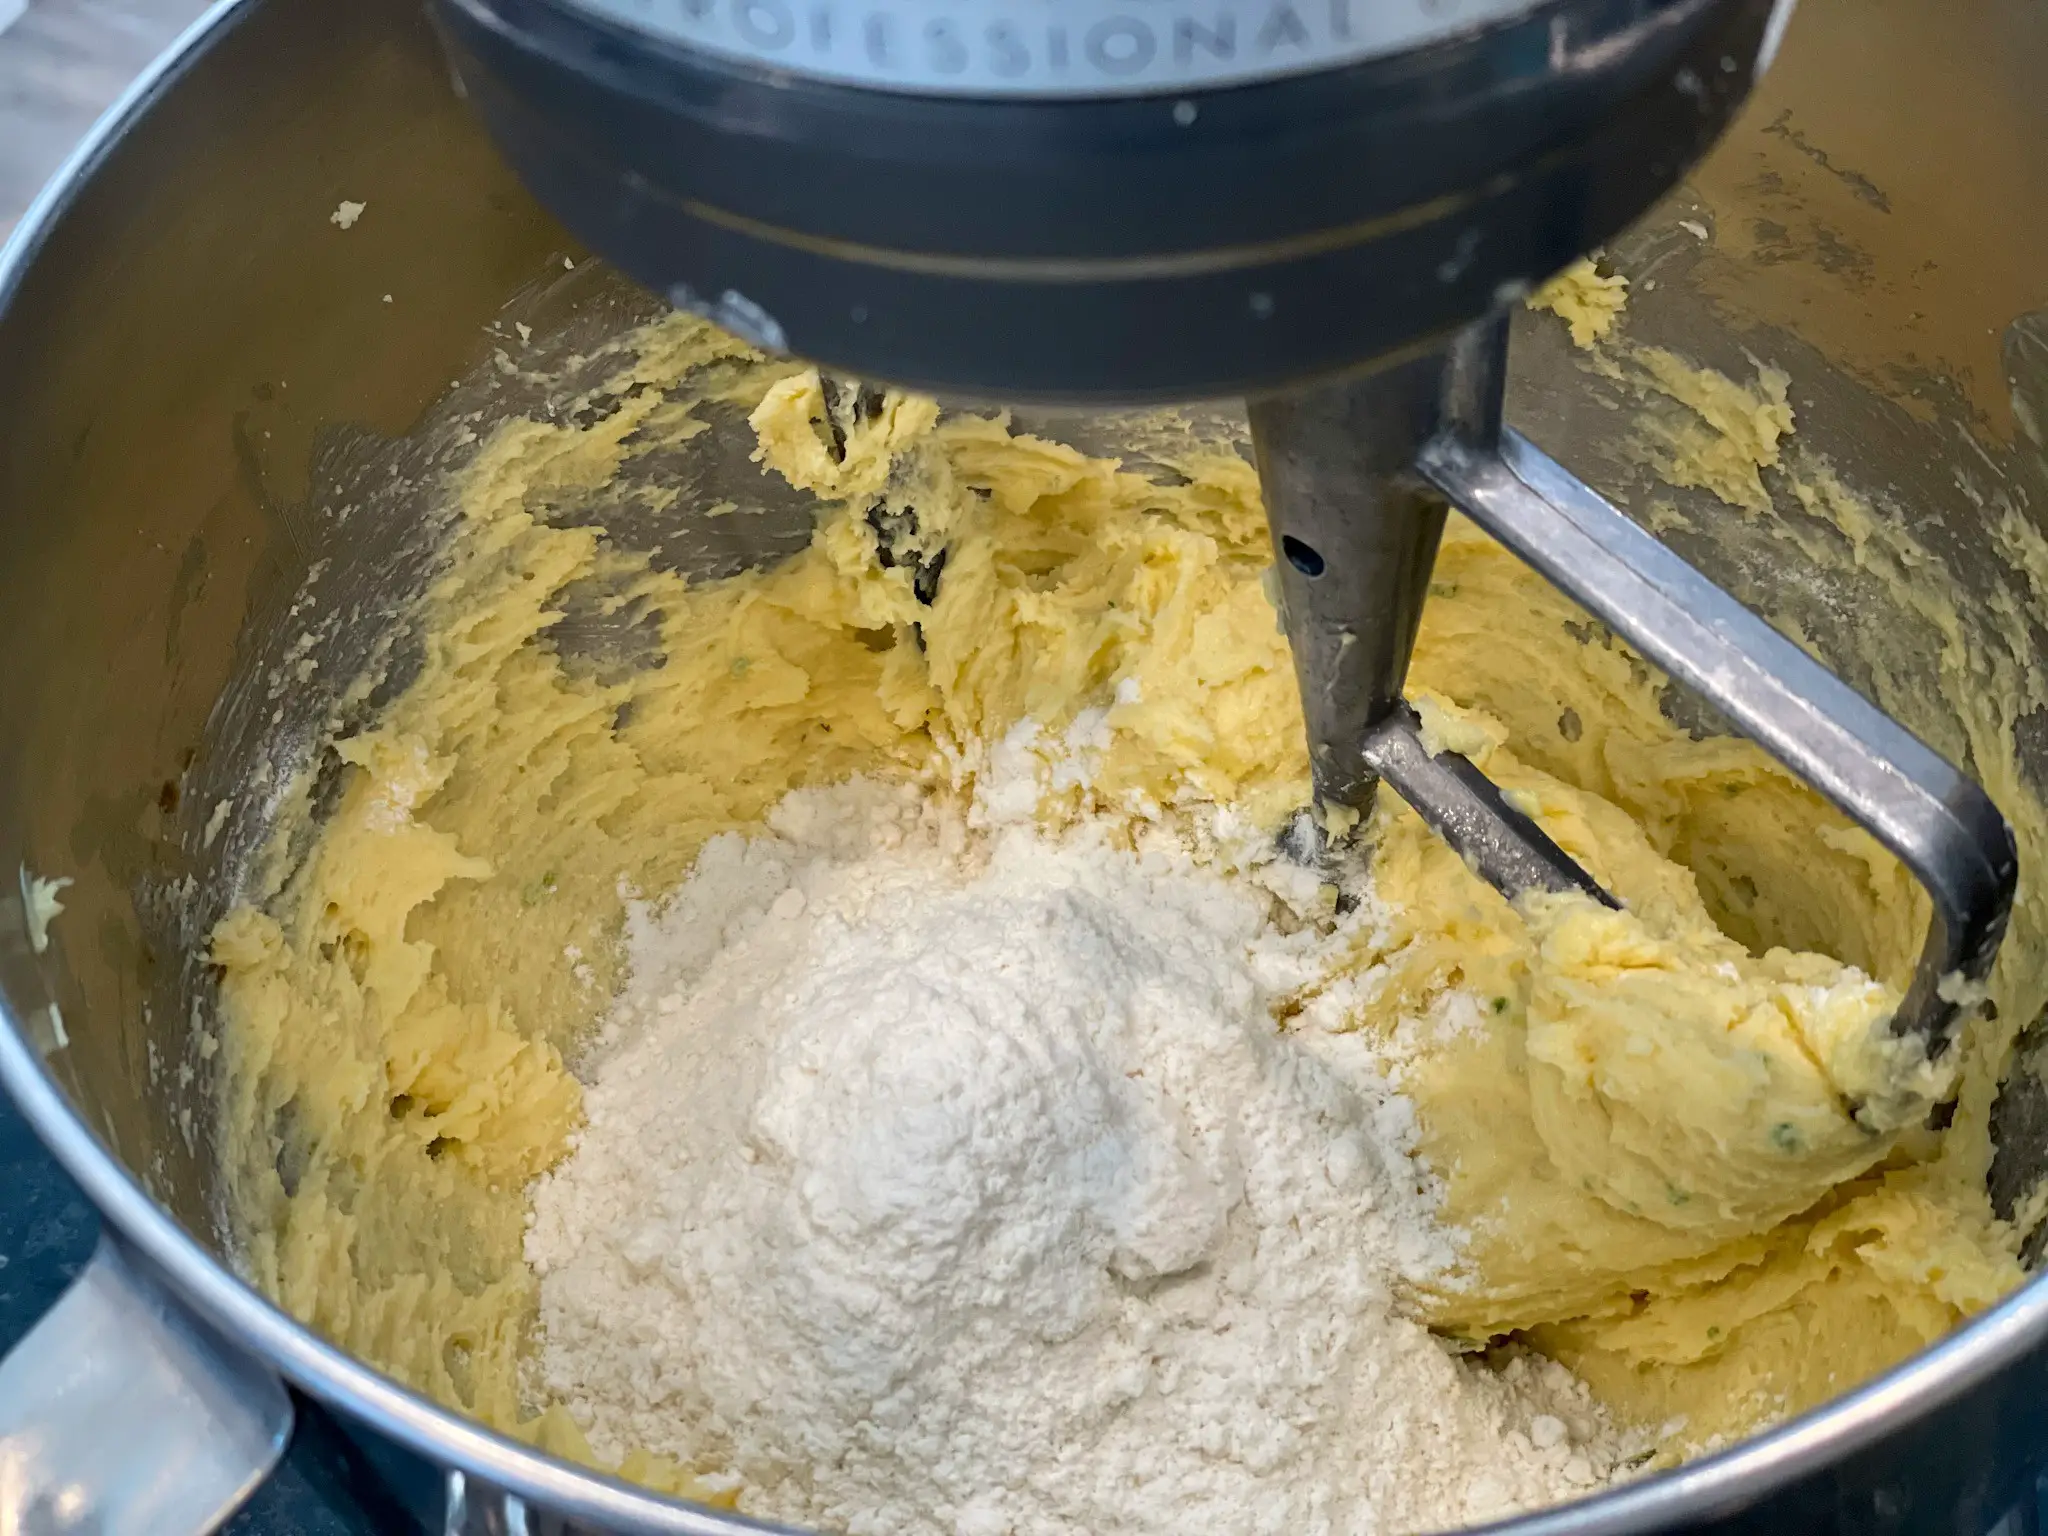 Mixing in the flour for torticas de moron.